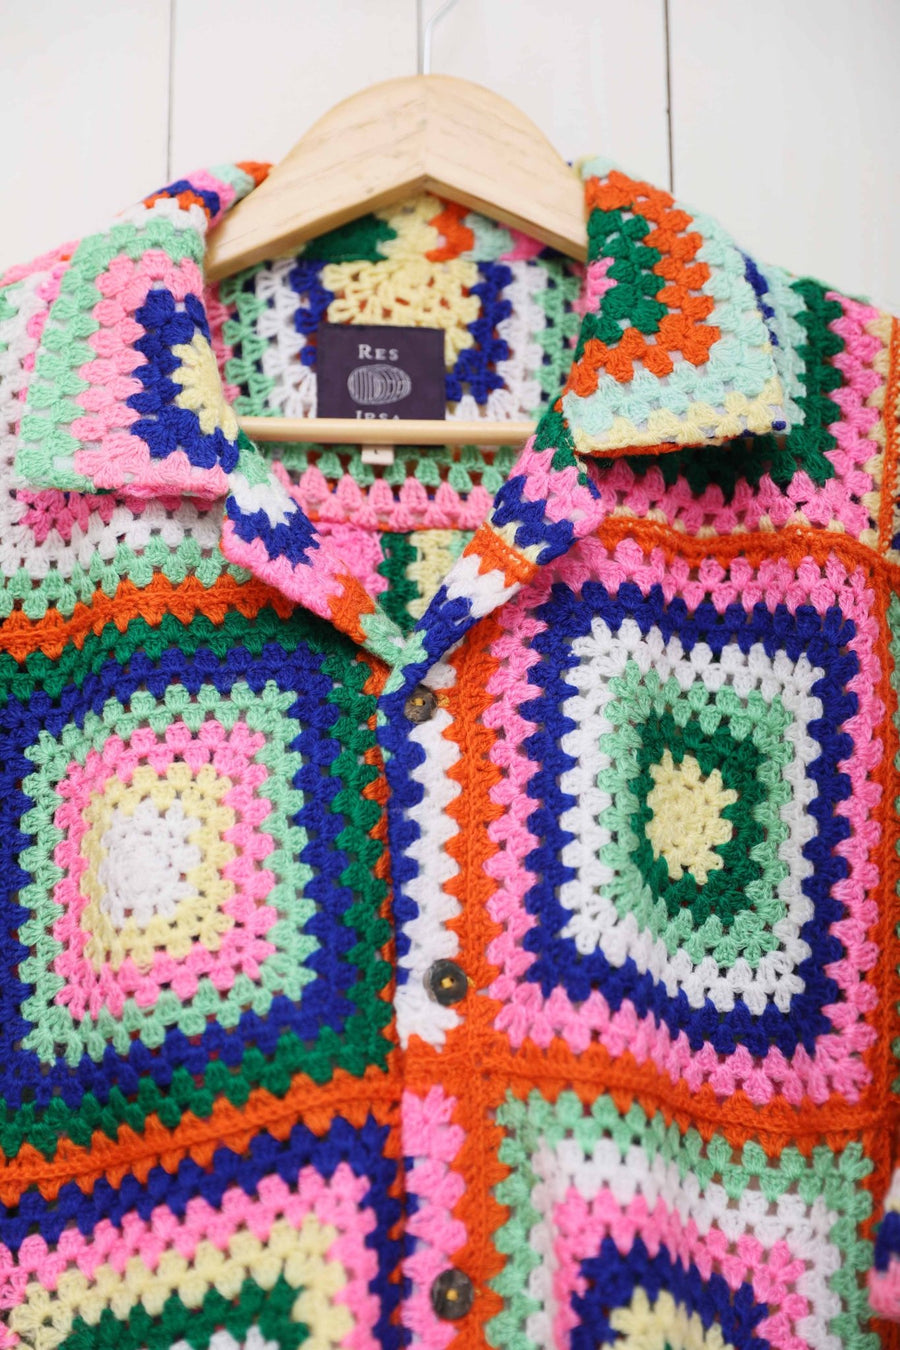 Crochet Camp Shirt #9 - RES IPSA